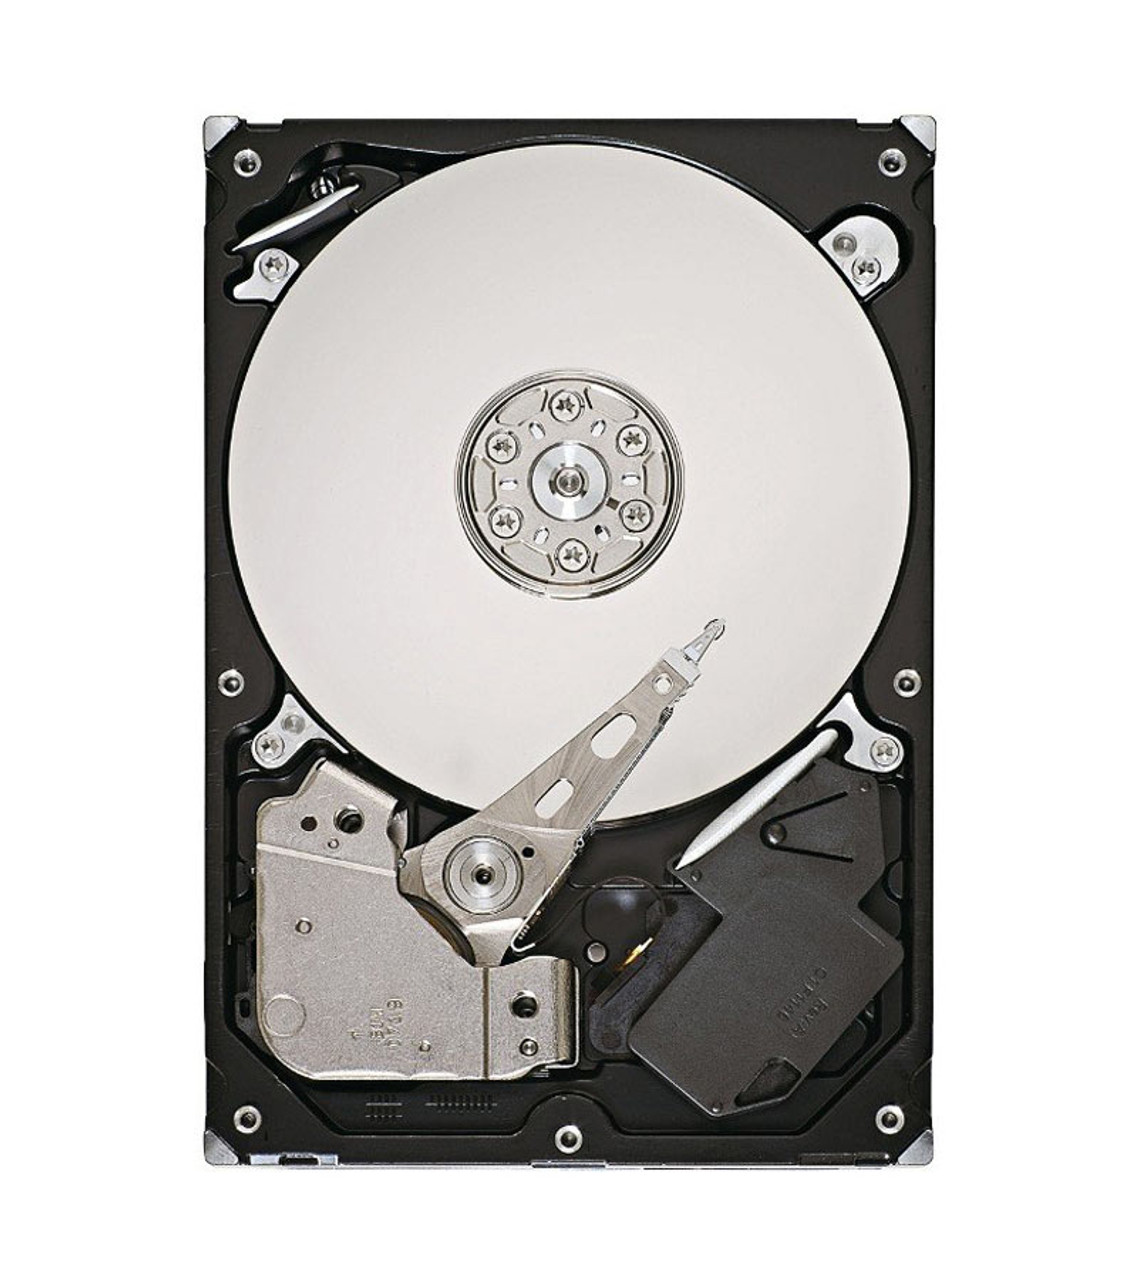 9DM154-501 - Seagate SV35.3 500GB 7200RPM SATA 3GB/s 32MB Cache 3.5-inch Internal Hard Disk Drive